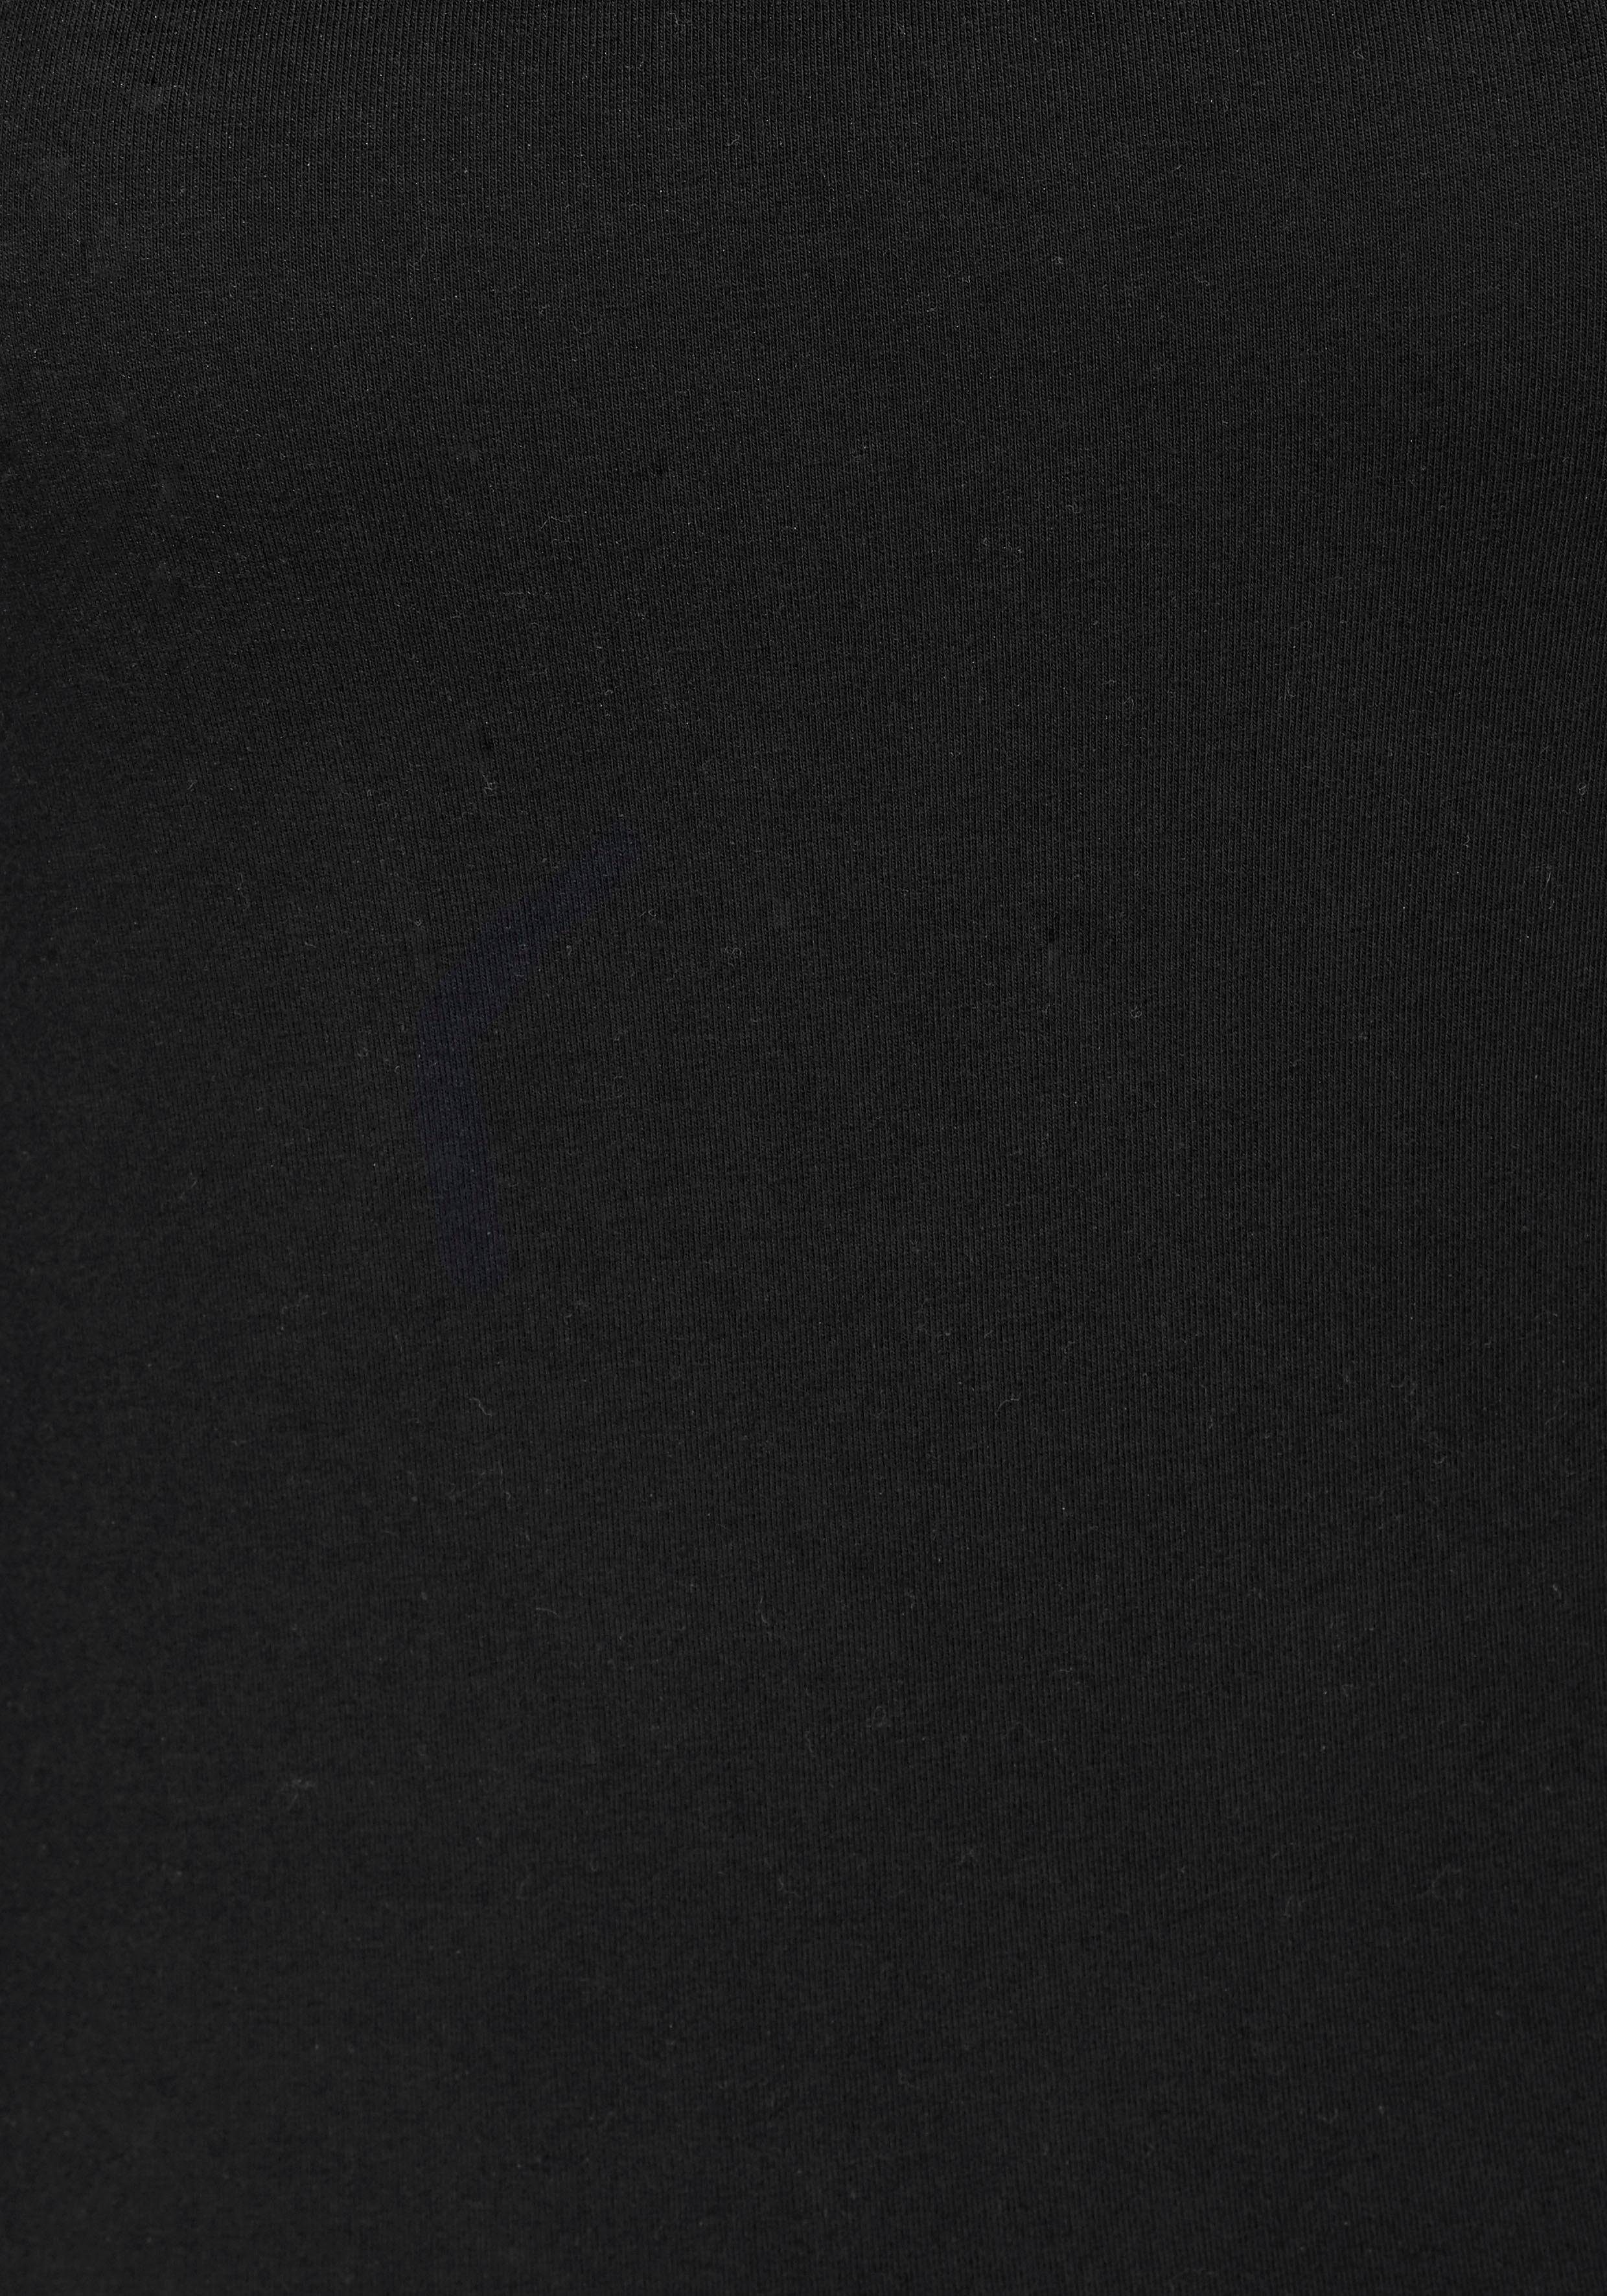 (2er-Pack) H.I.S schwarz elastischer Unterhemd Baumwoll-Qualität, Spaghettiträger-Top, aus Unterziehshirt